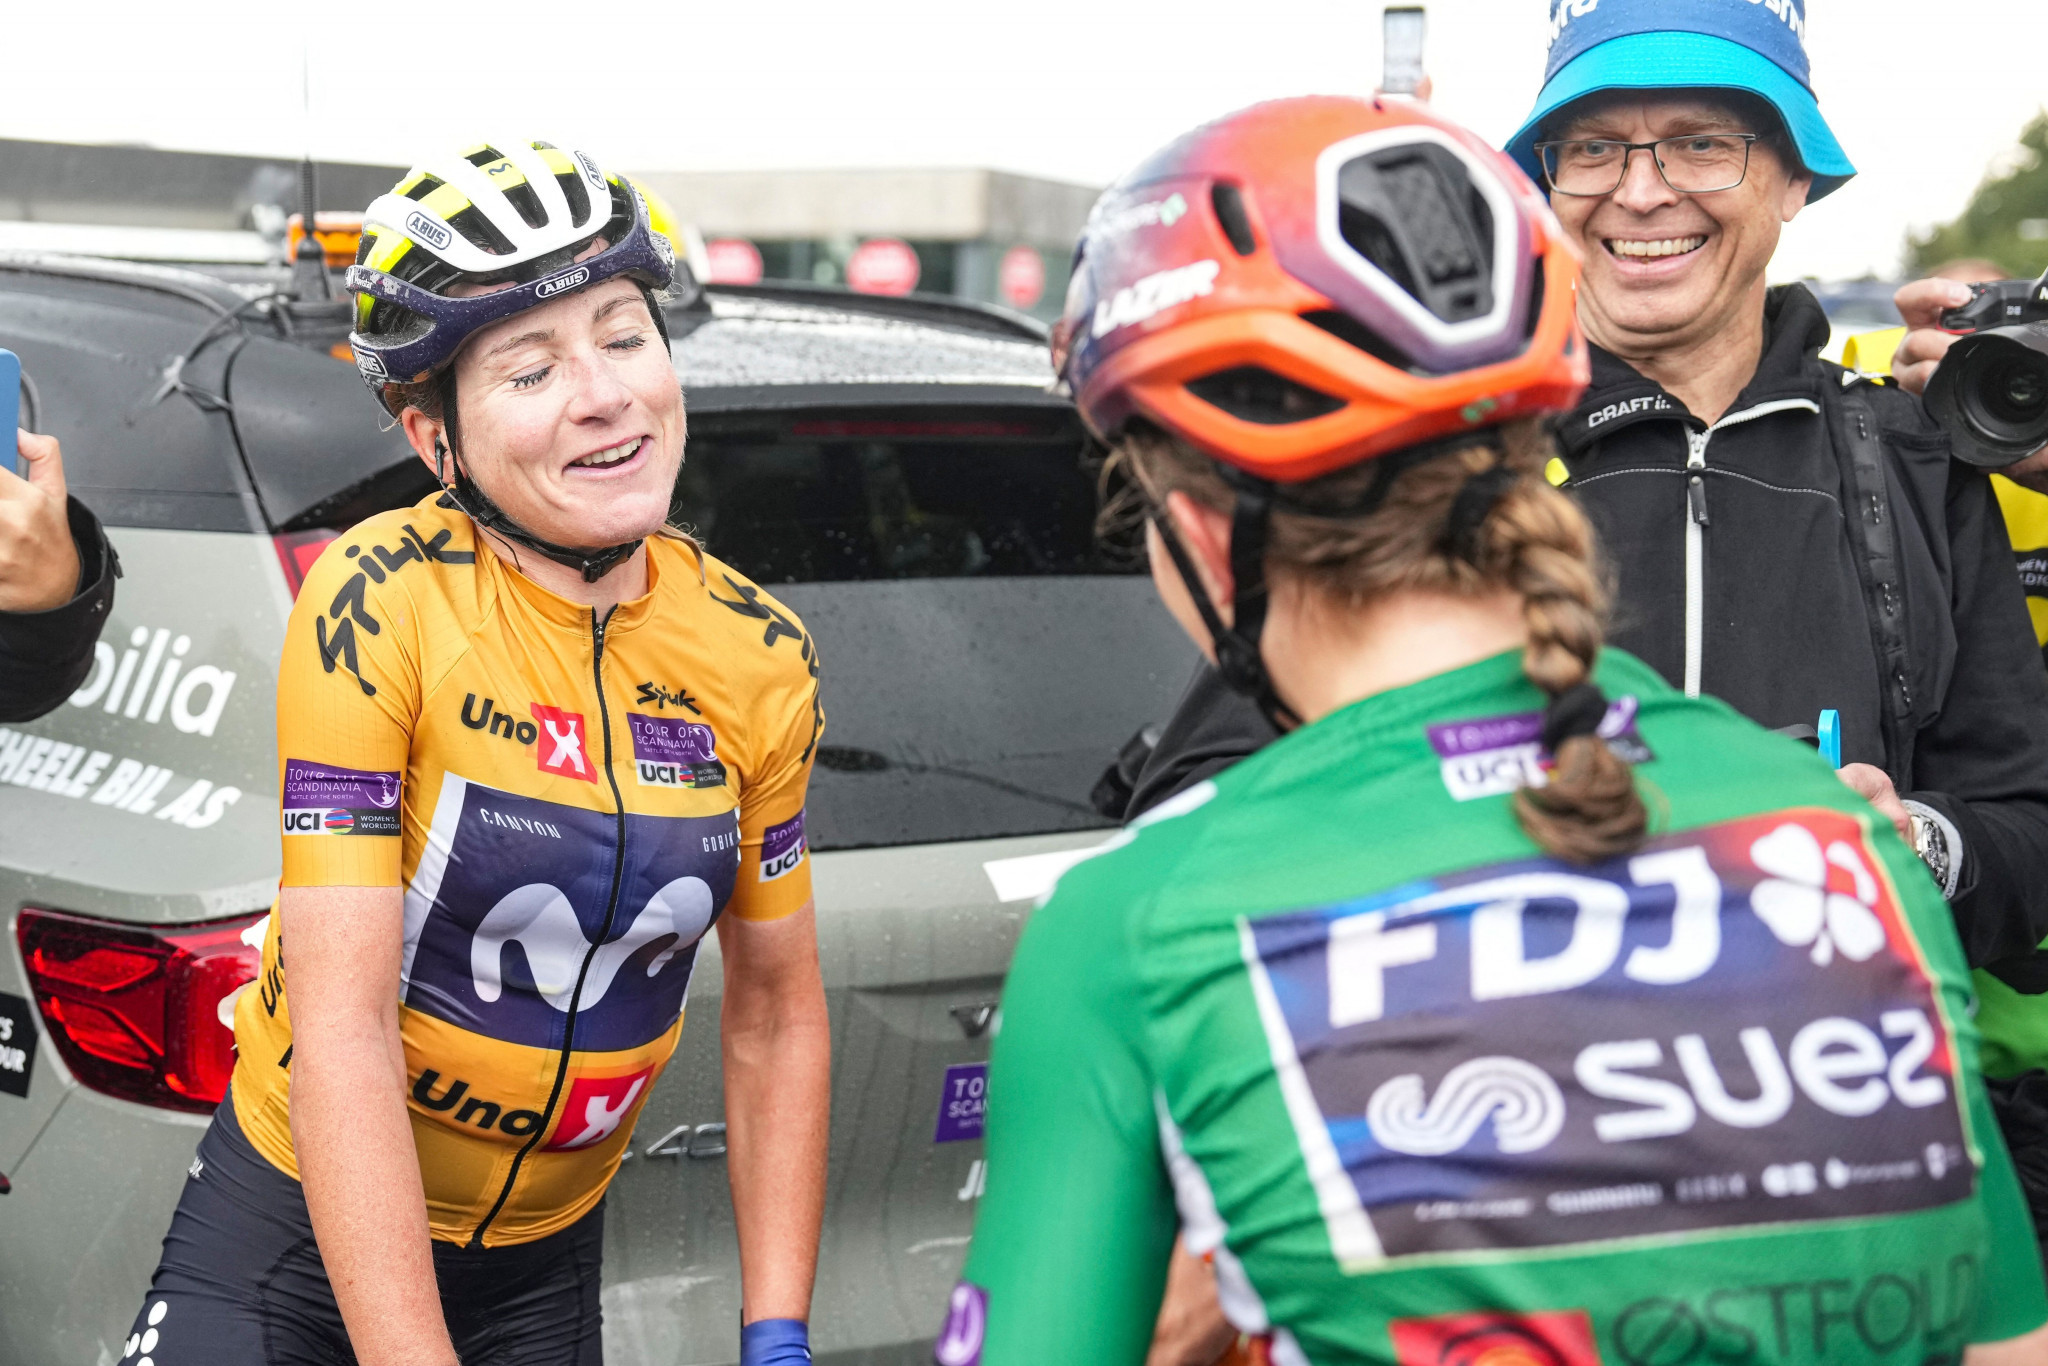 Van Vleuten edges Uttrup Ludwig to win overall title in thrilling Tour of Scandinavia